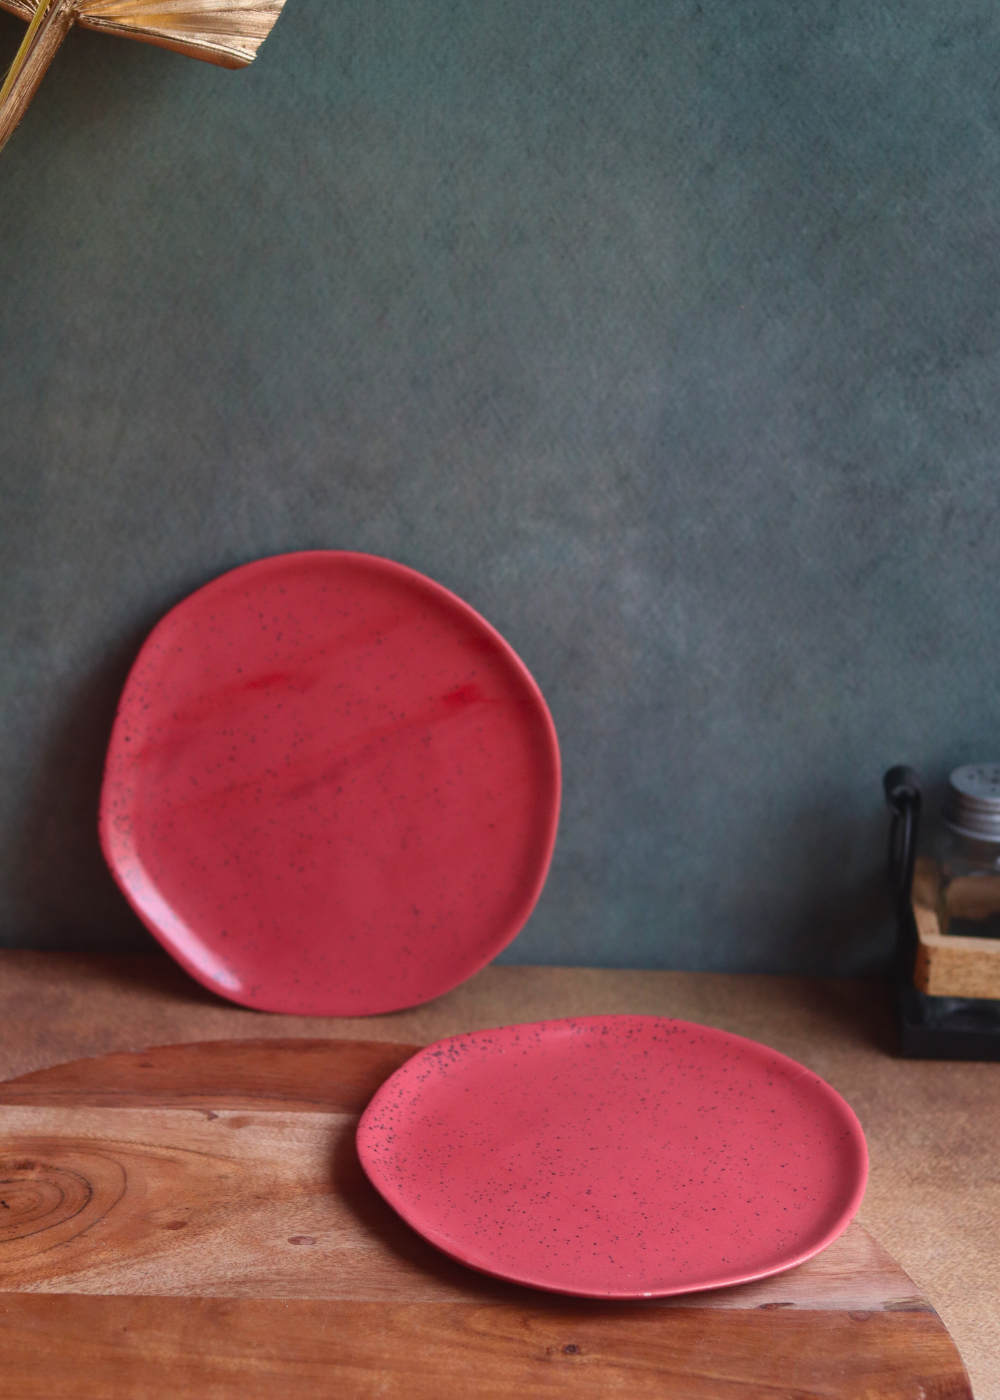 handmade red plate made by premium ceramic 